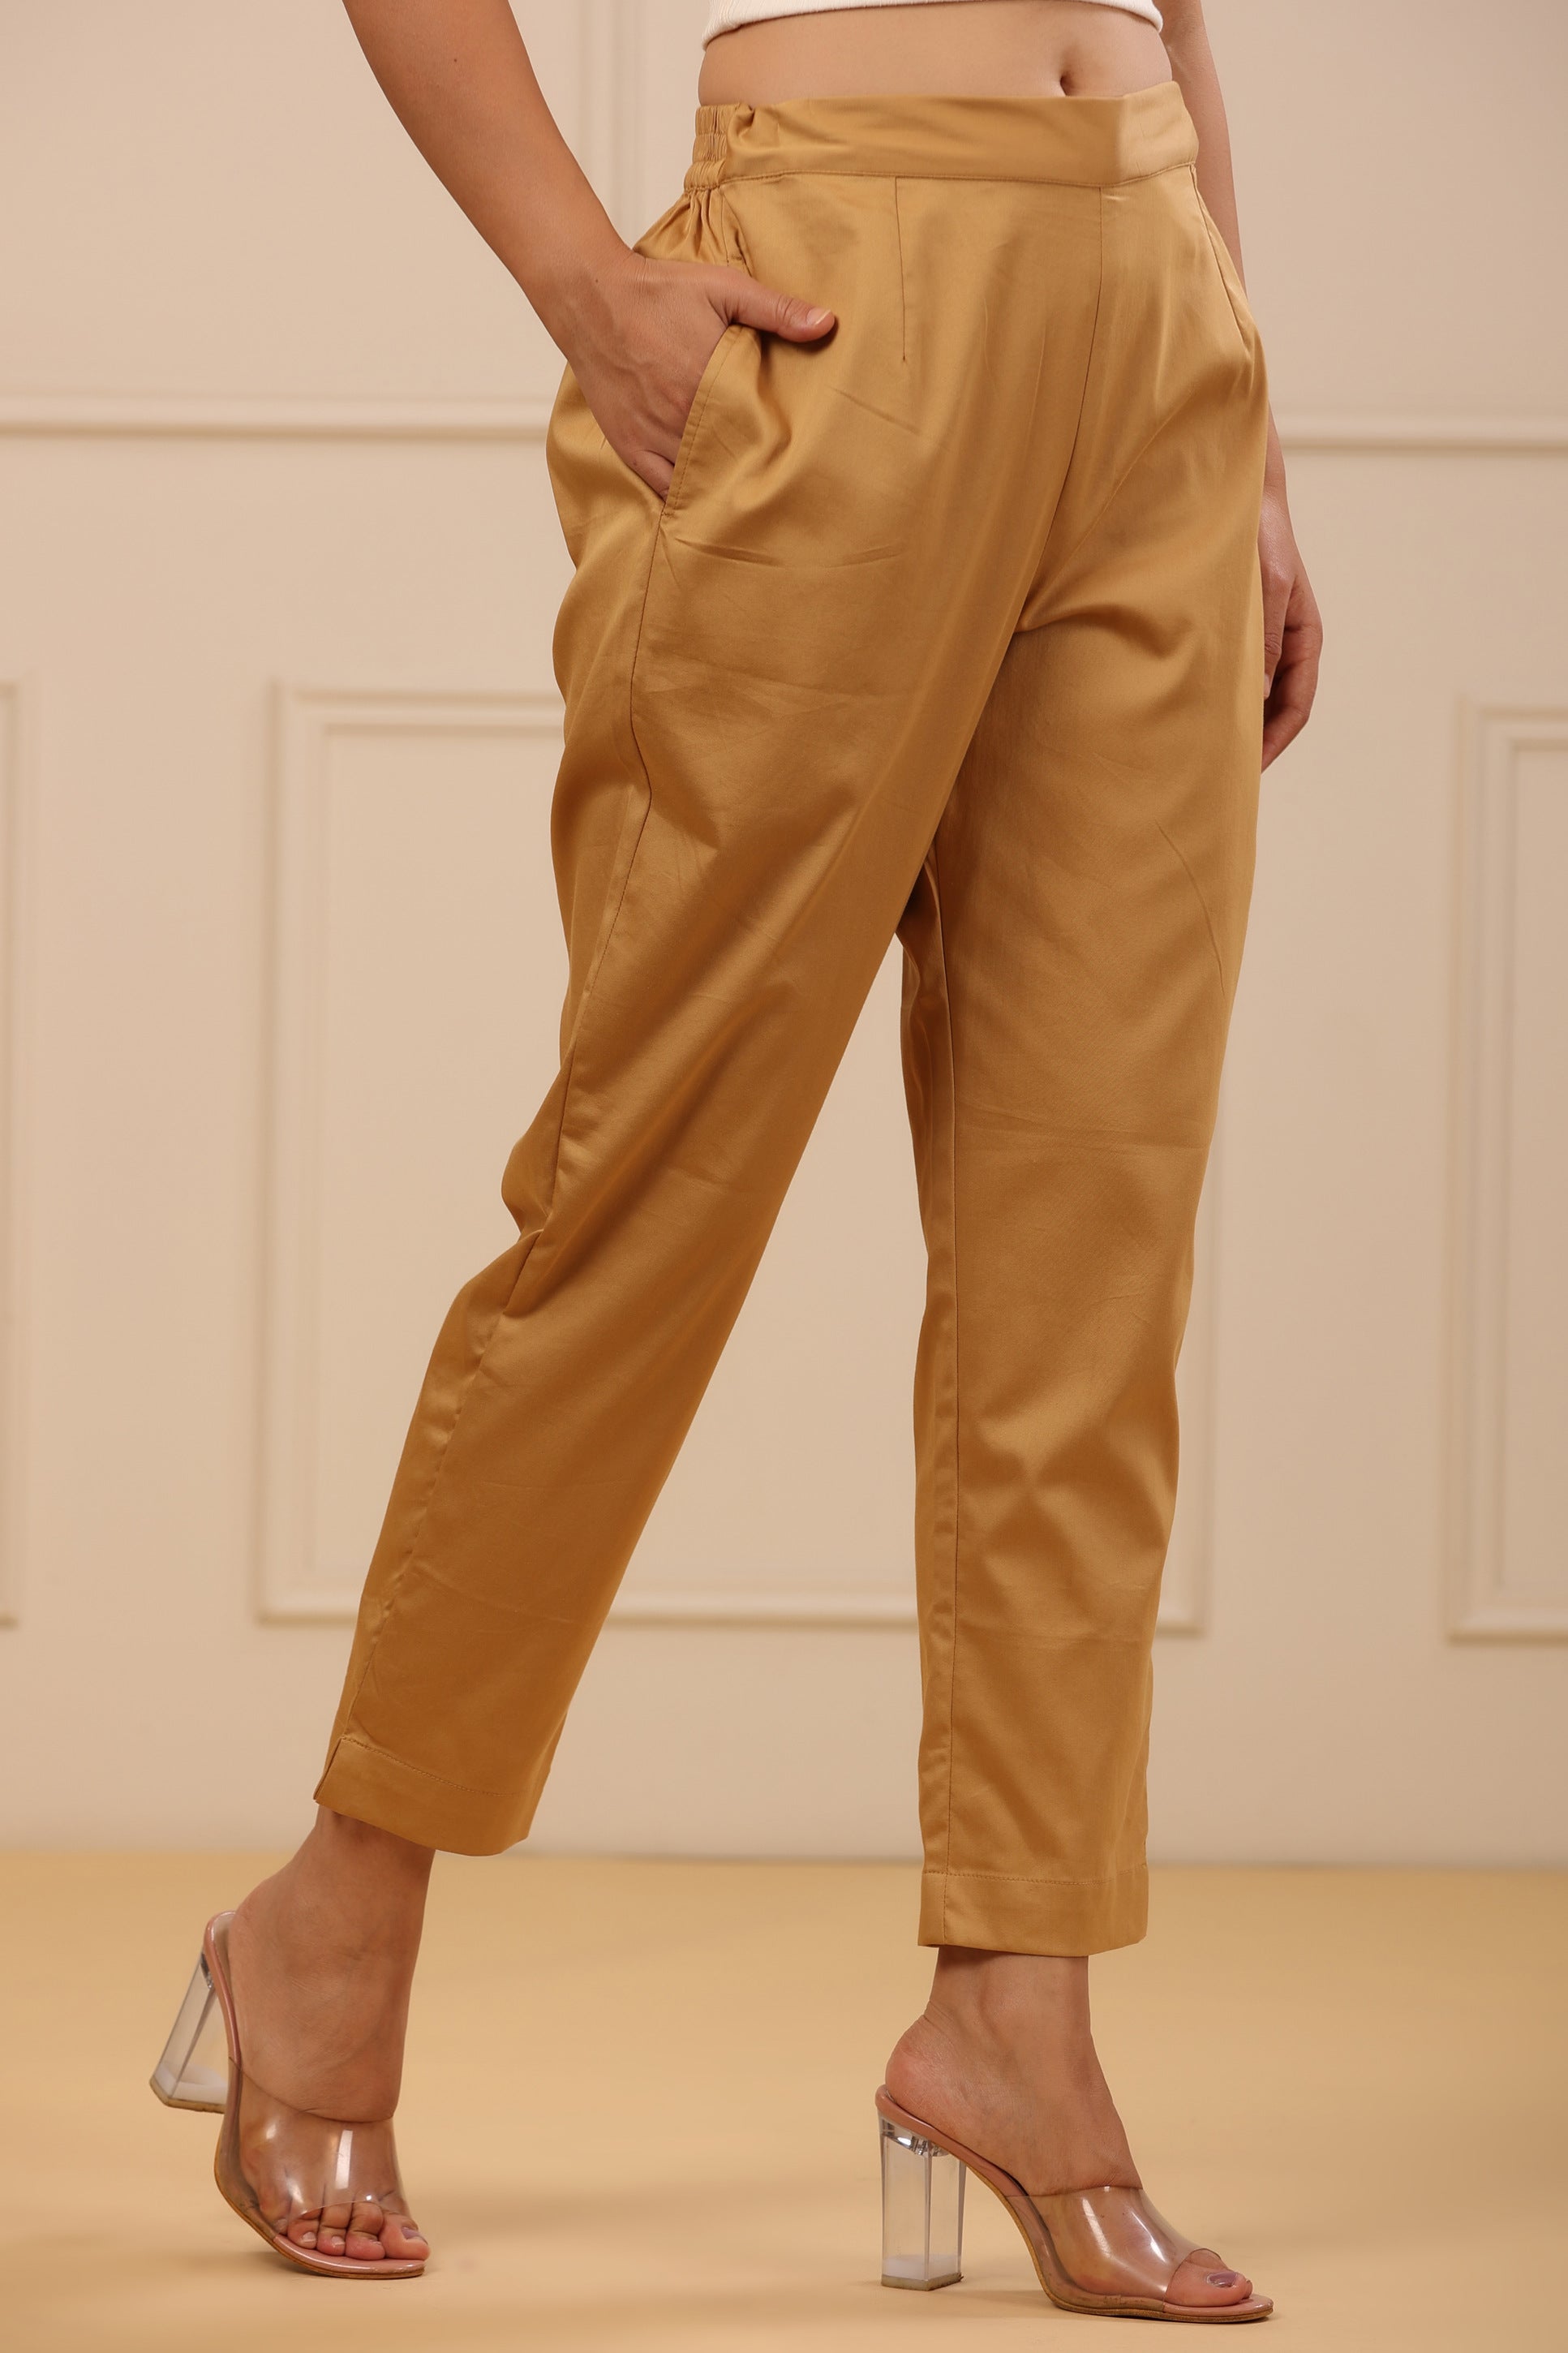 Juniper Women's Beige  Solid Stright Slim Pant